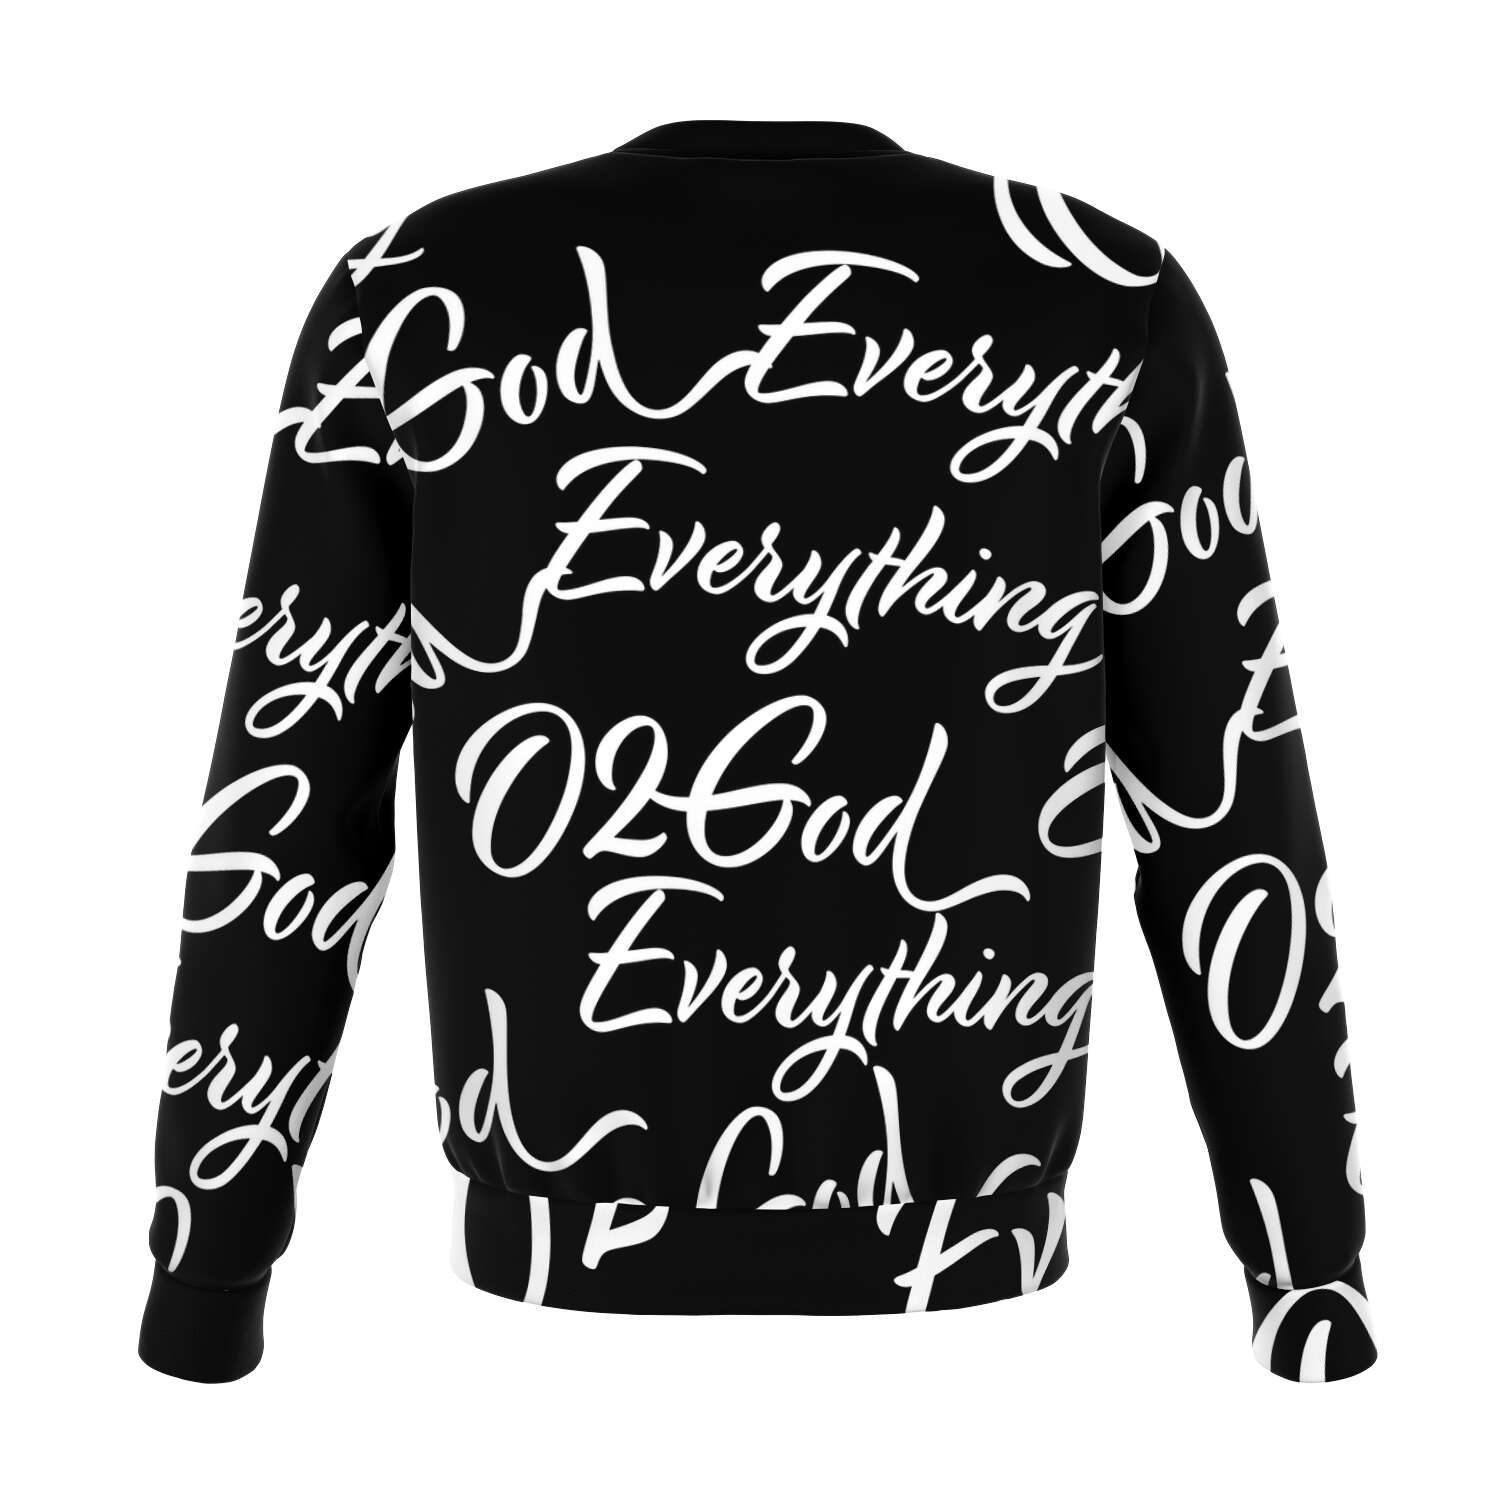 O2GOD Text ART Sweatshirt Black